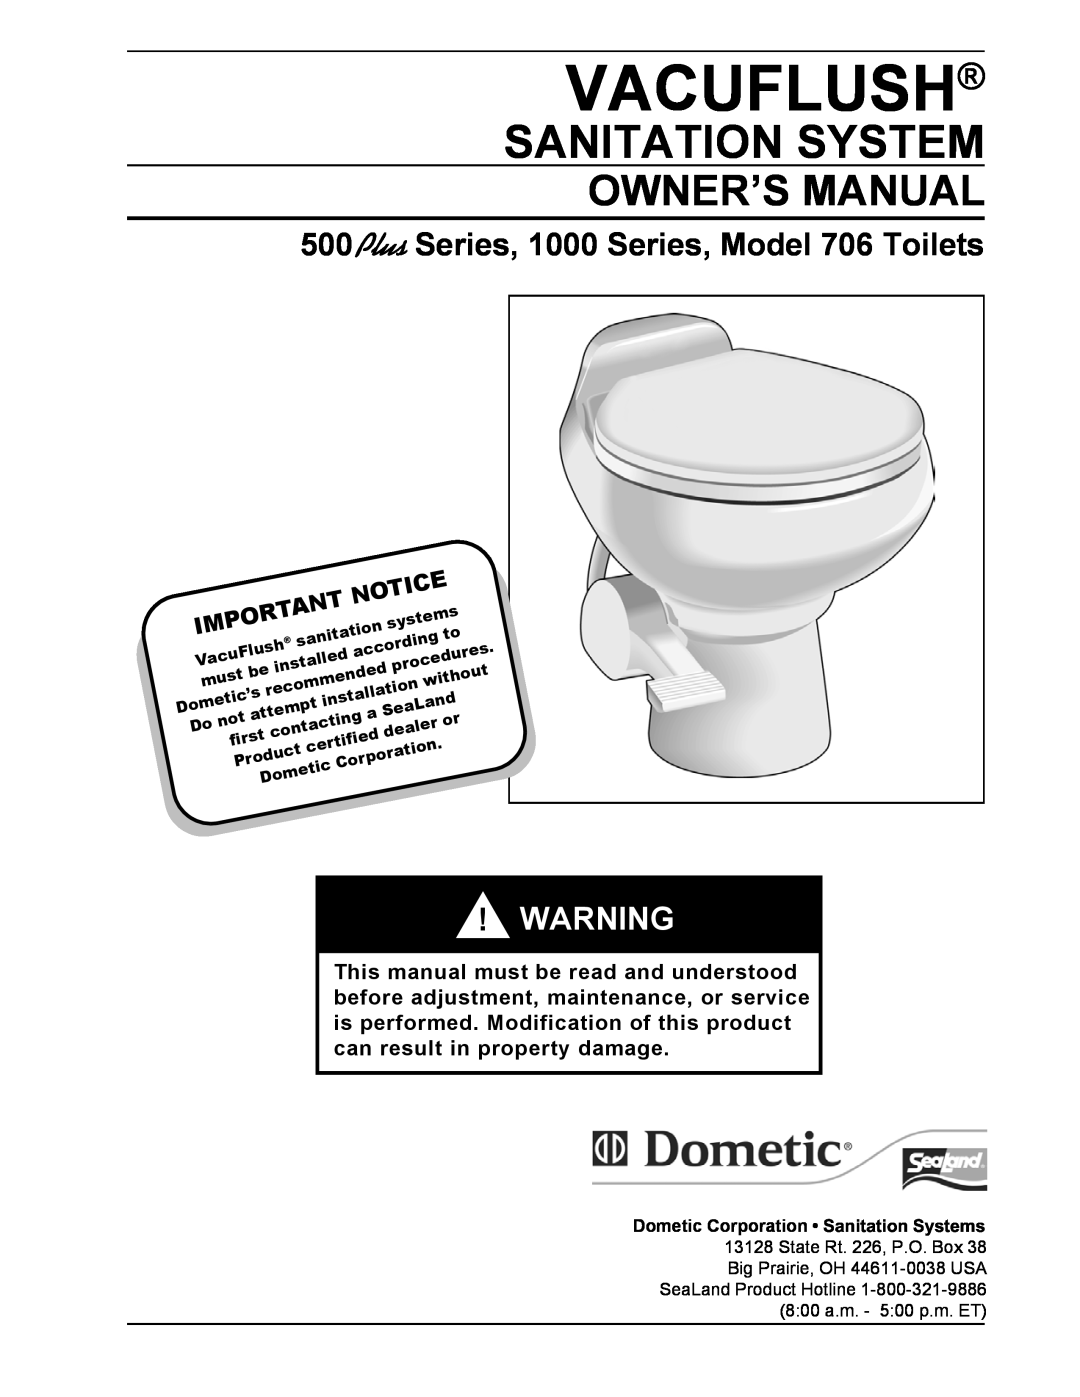 Dometic owner manual Vacuflush, Sanitation System, 500Plus Series, 1000 Series, Model 706 Toilets 